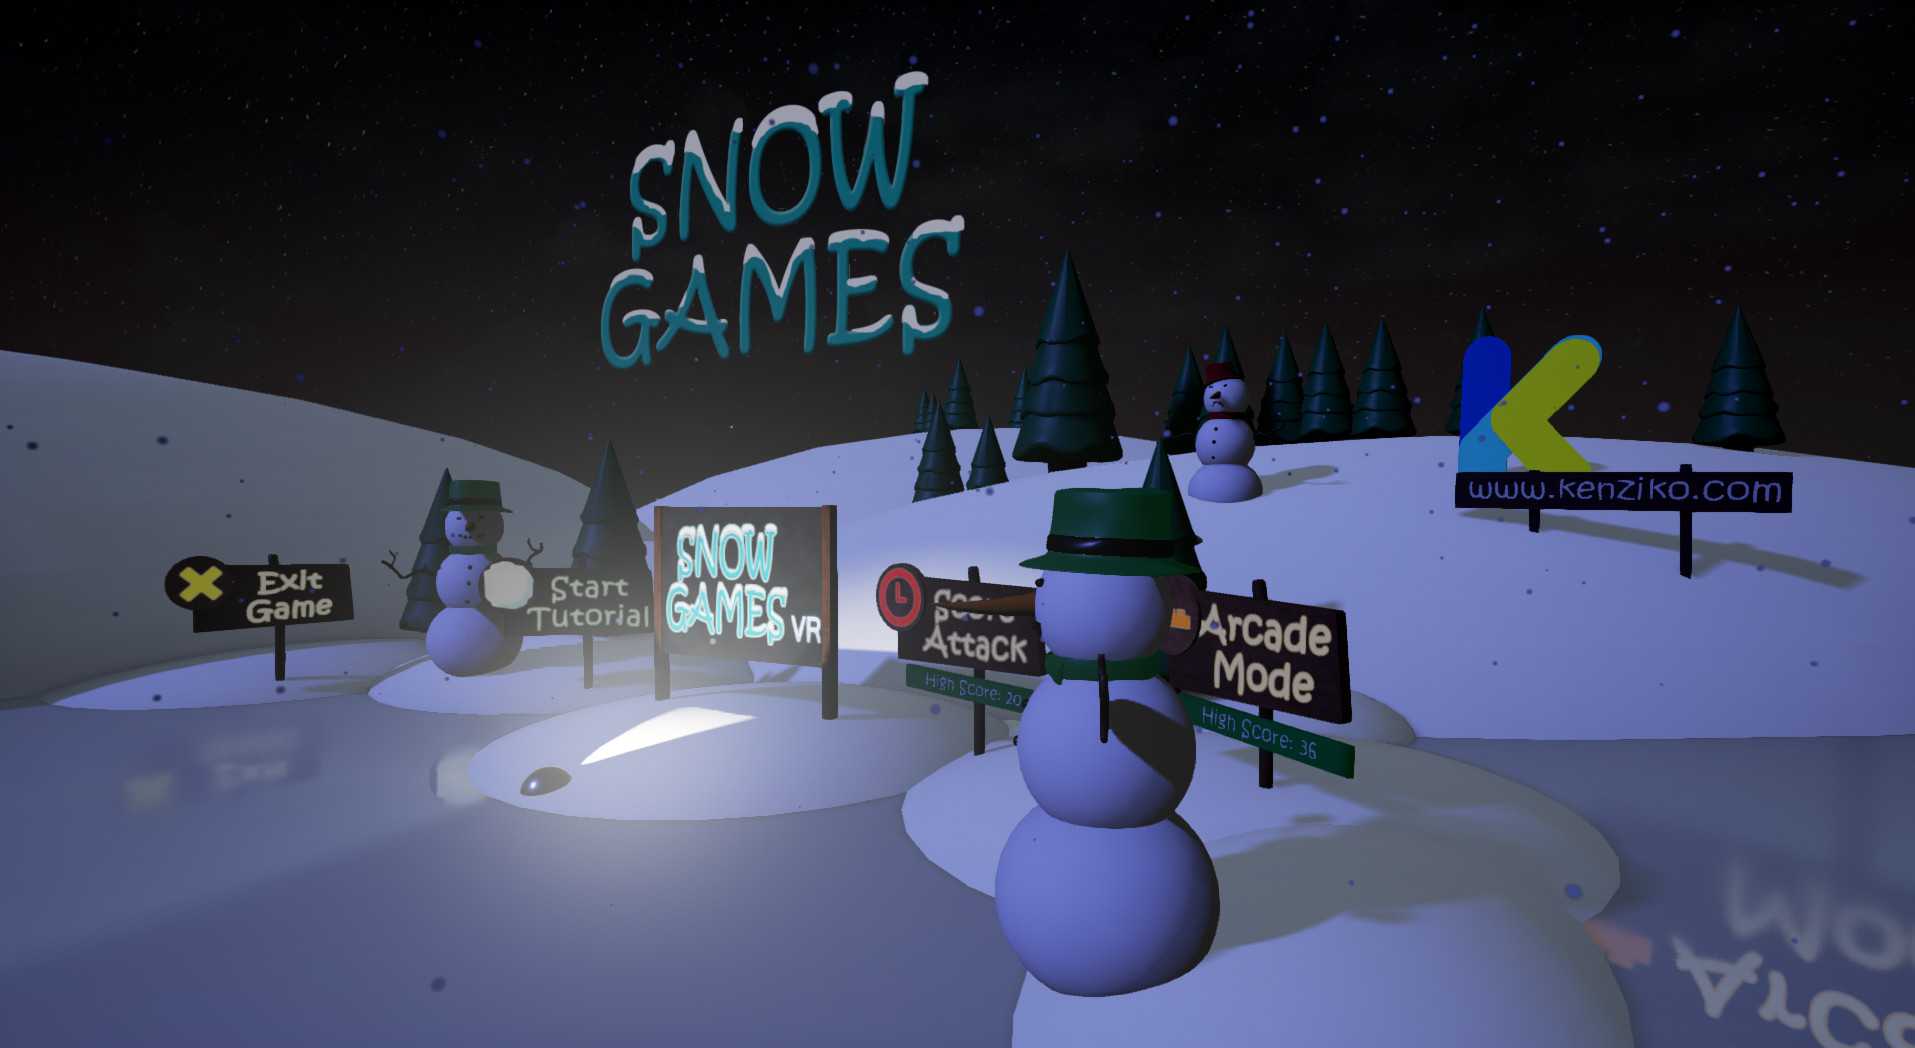 Snow Games VR